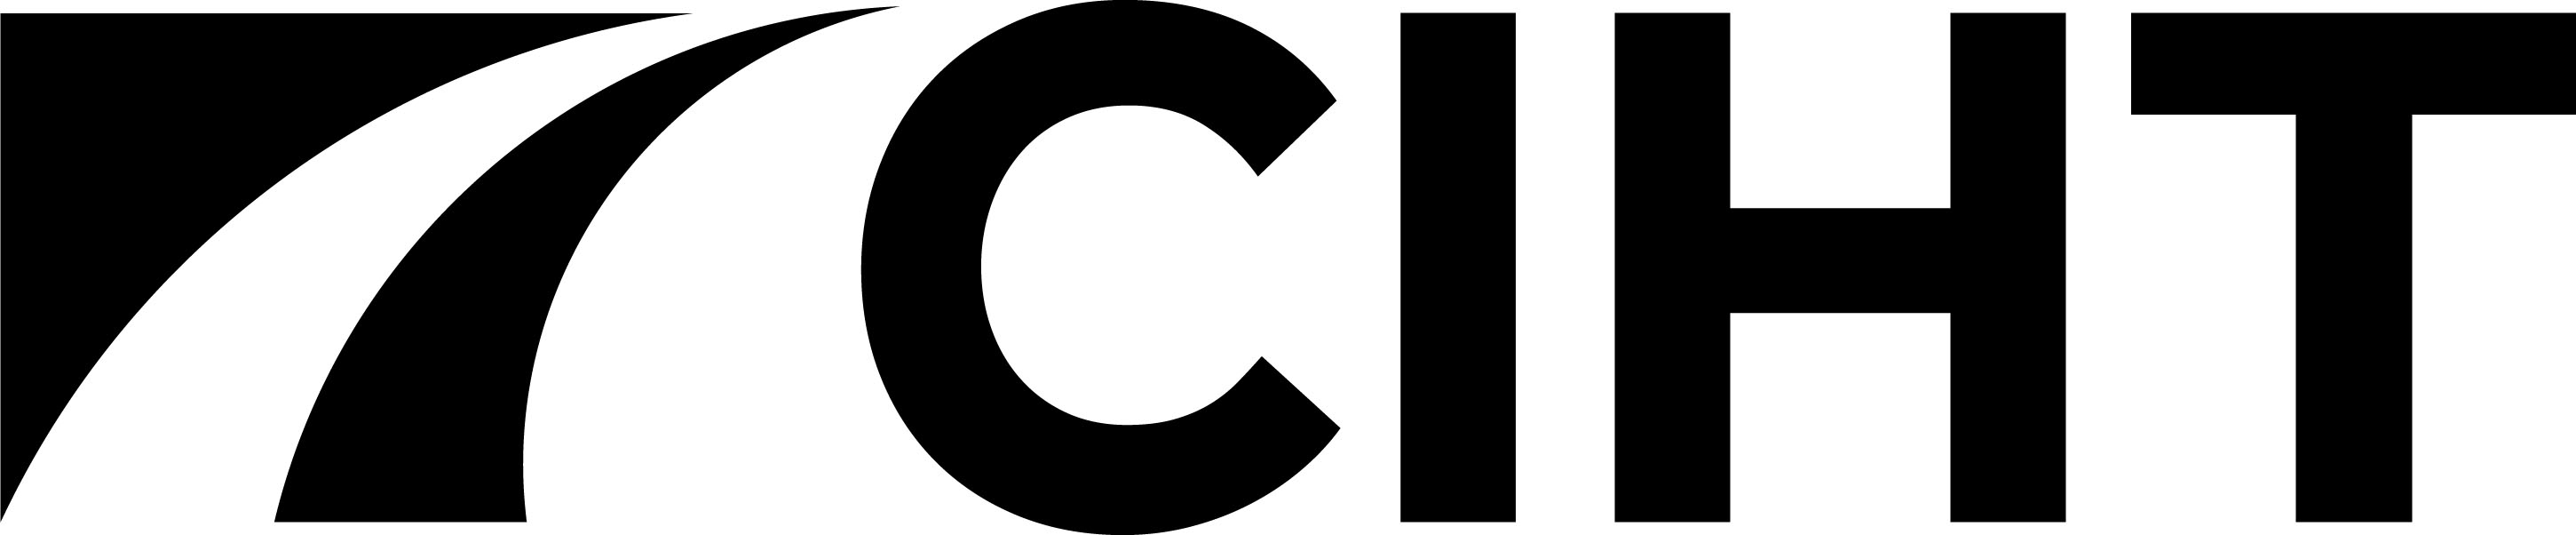 Chartered Institution of Highways & Transportation (CIHT) logo